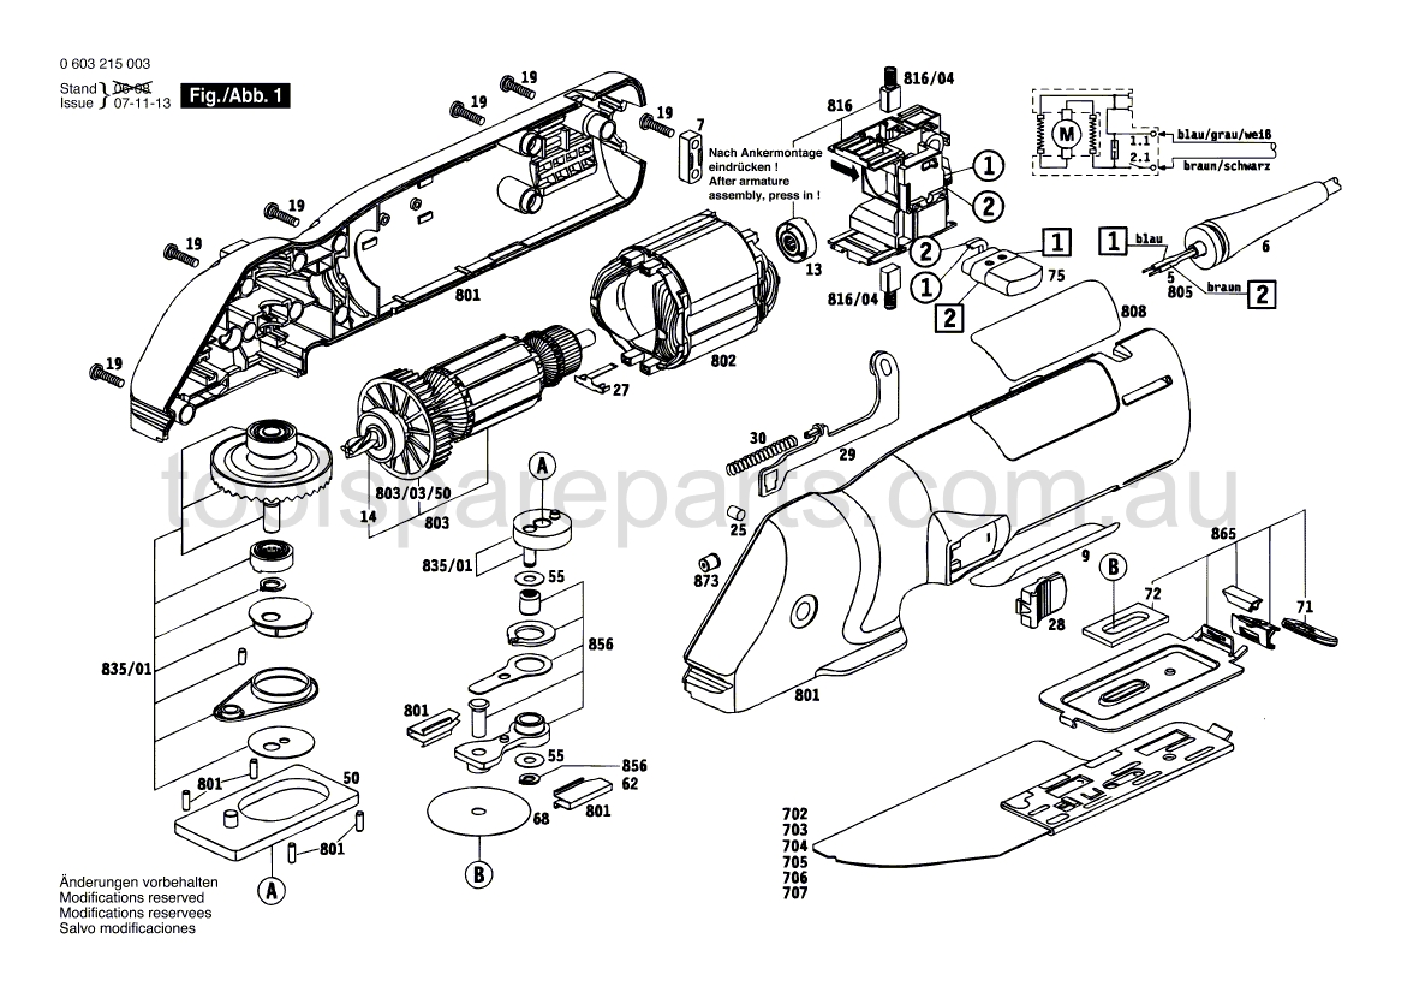 Bosch PFS 250 0603215237  Diagram 1